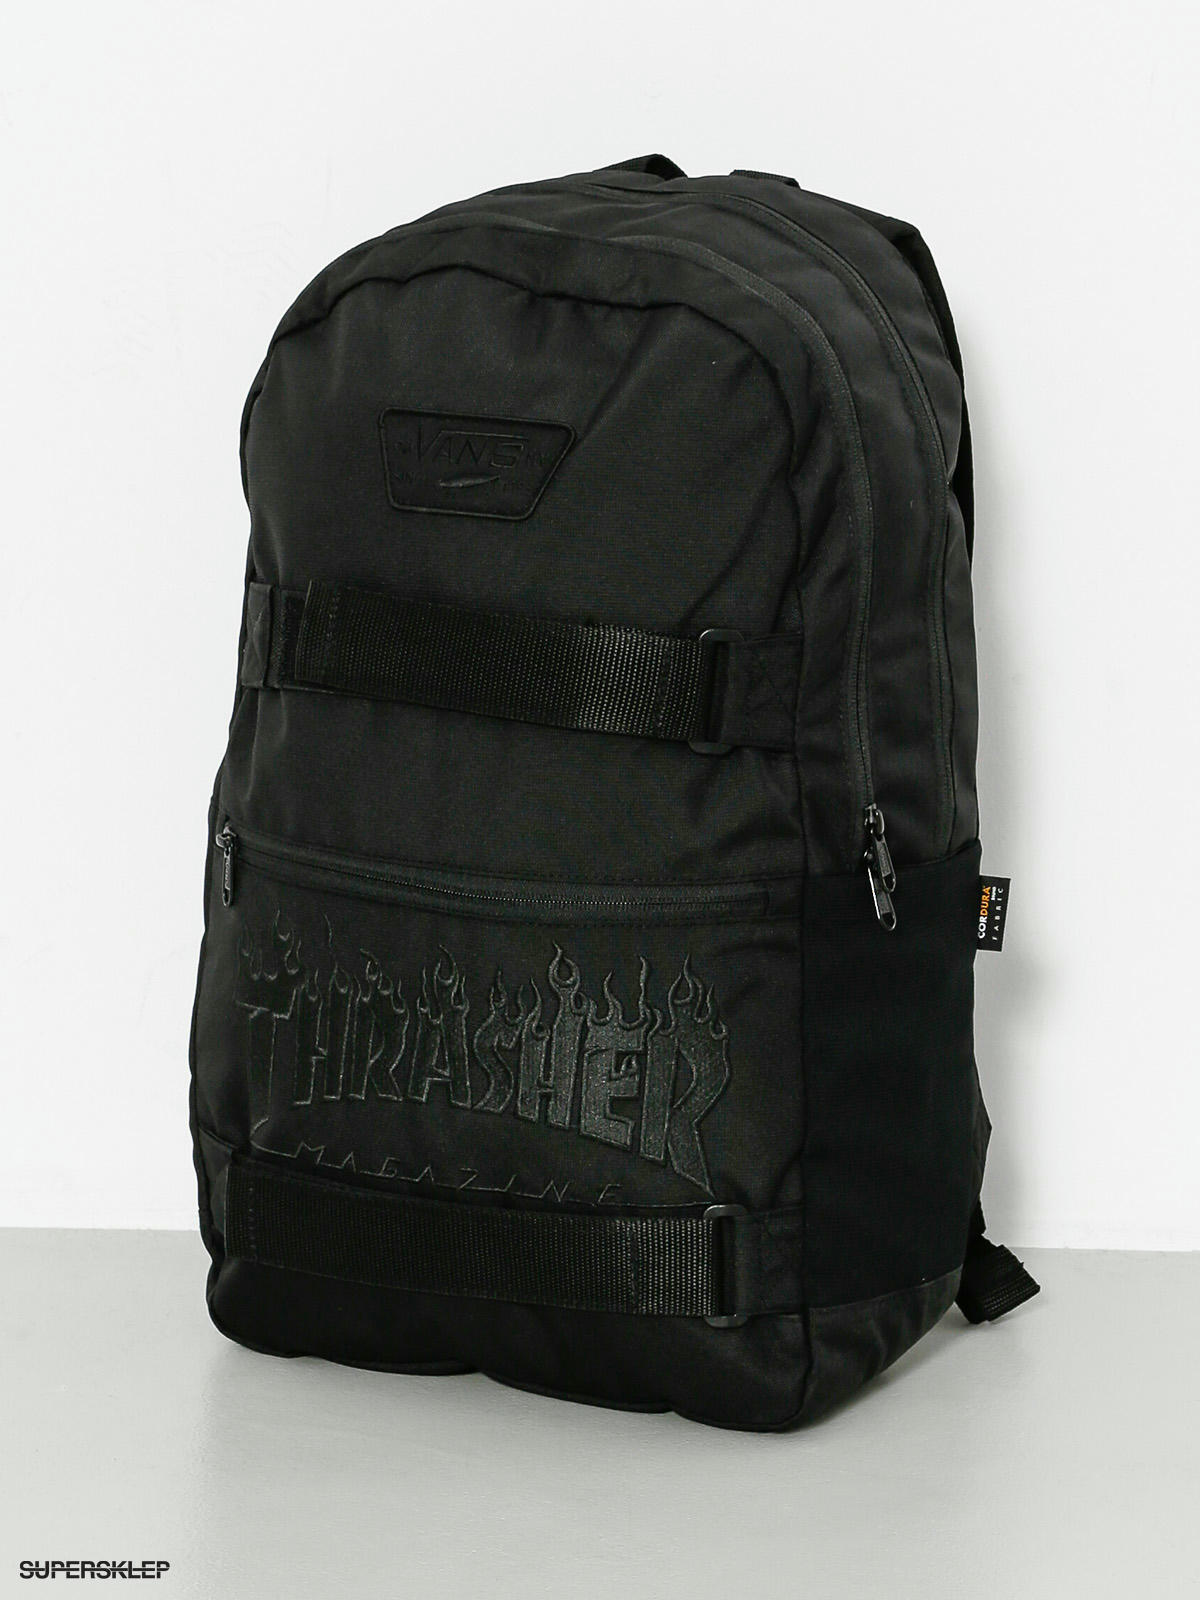 vans x thrasher authentic iii black backpack